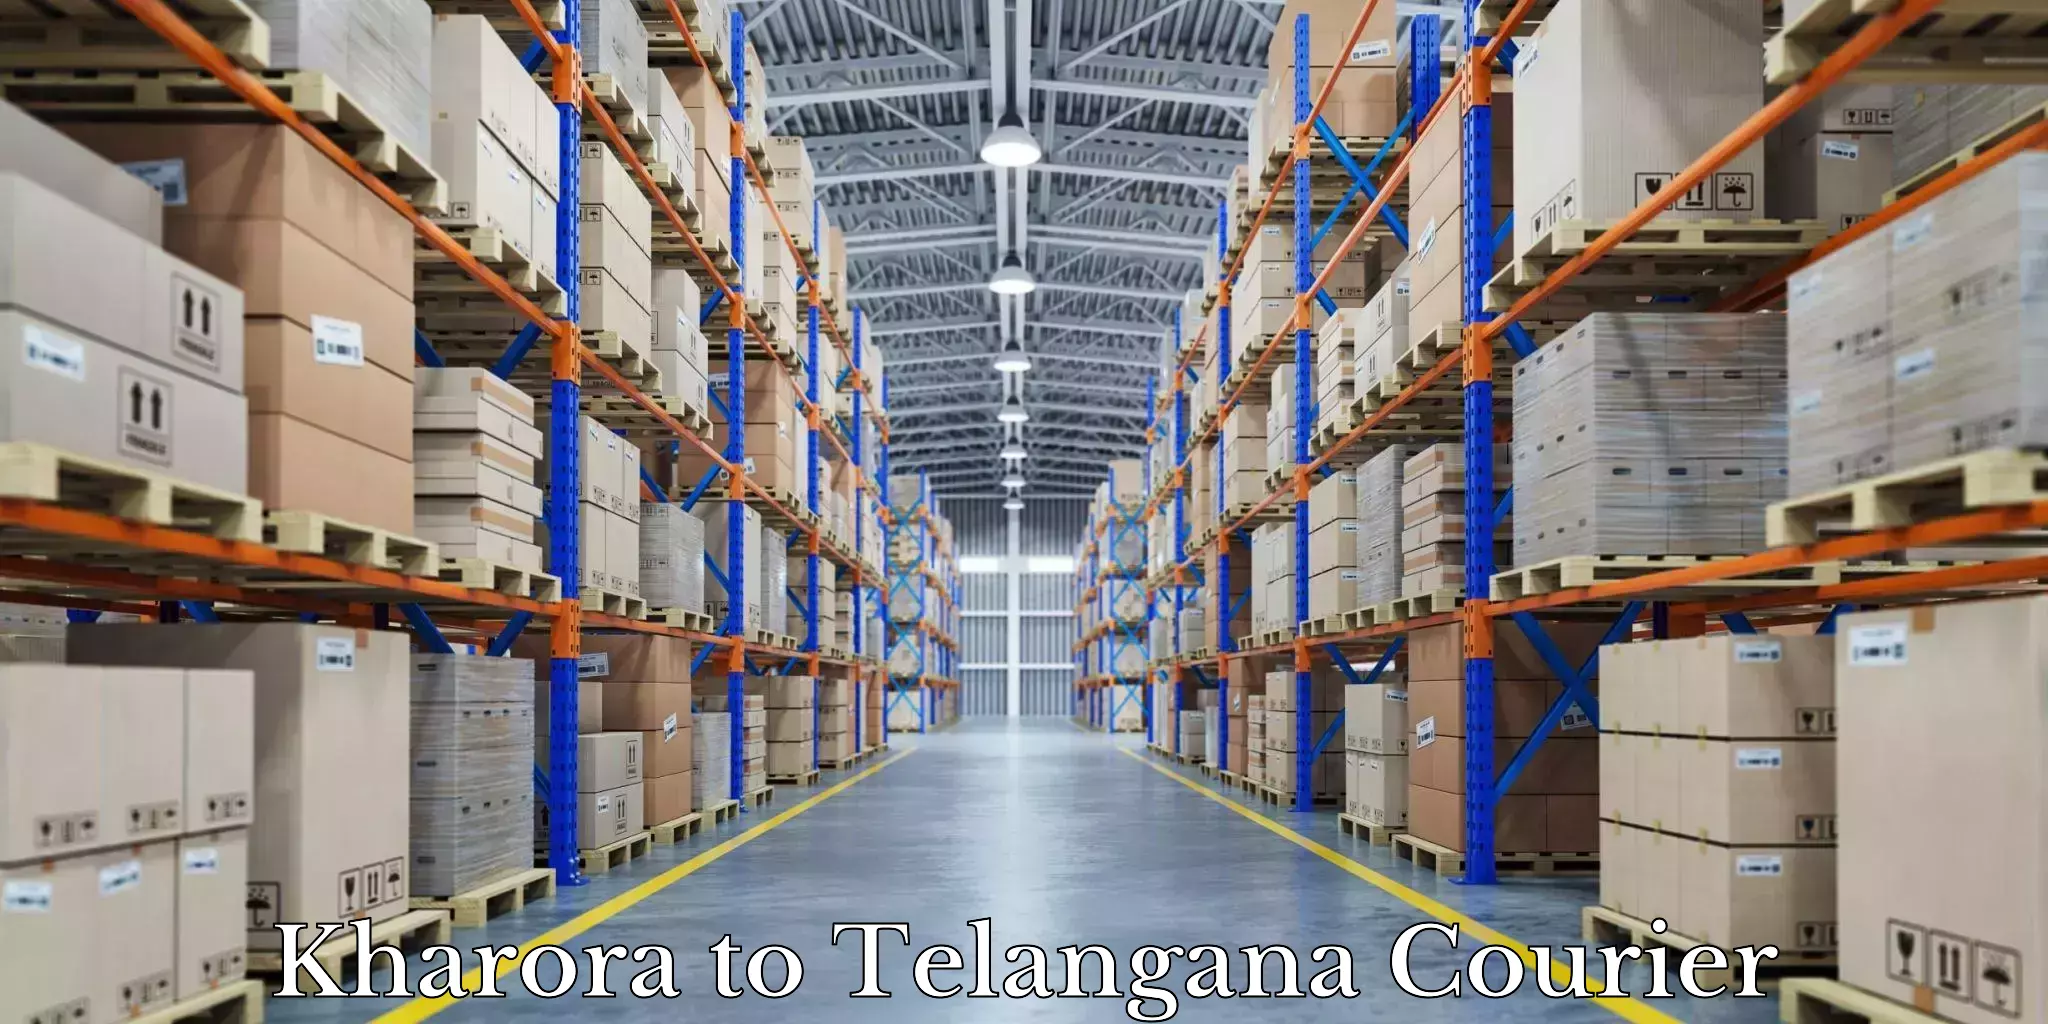 Professional furniture movers in Kharora to Telangana